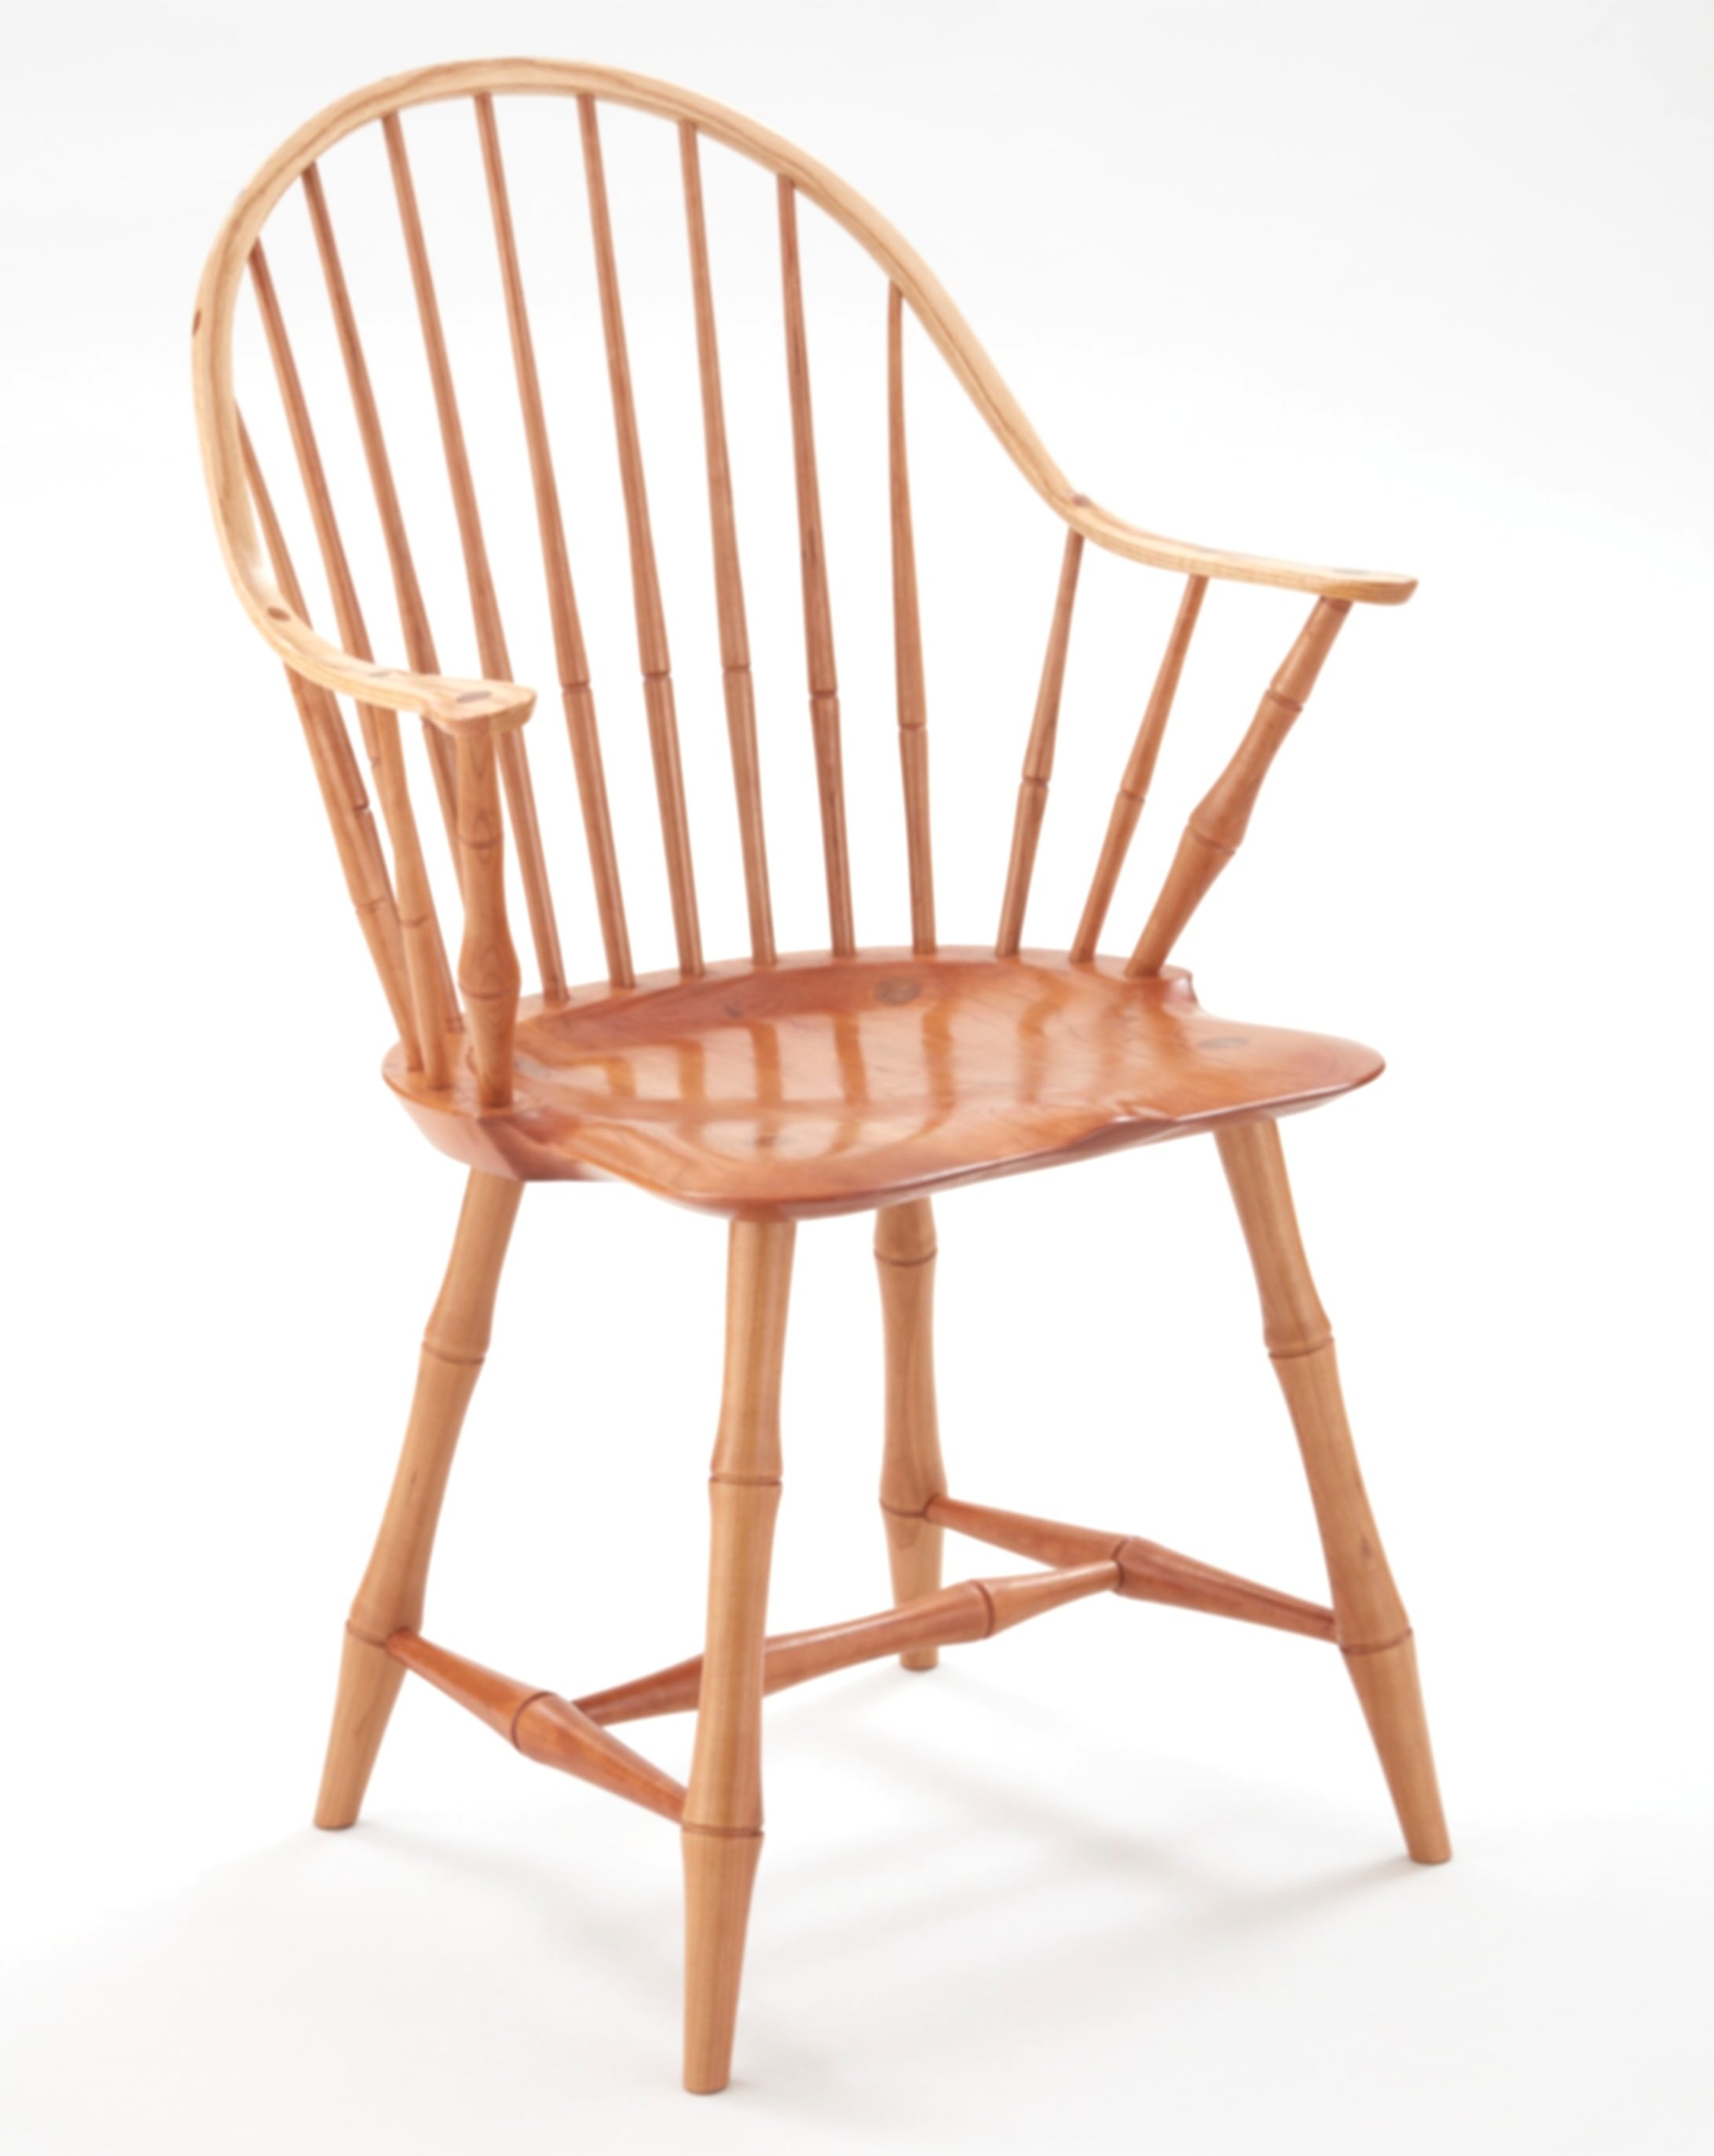 2019_MWG-1903+Bowback+Chair.jpg